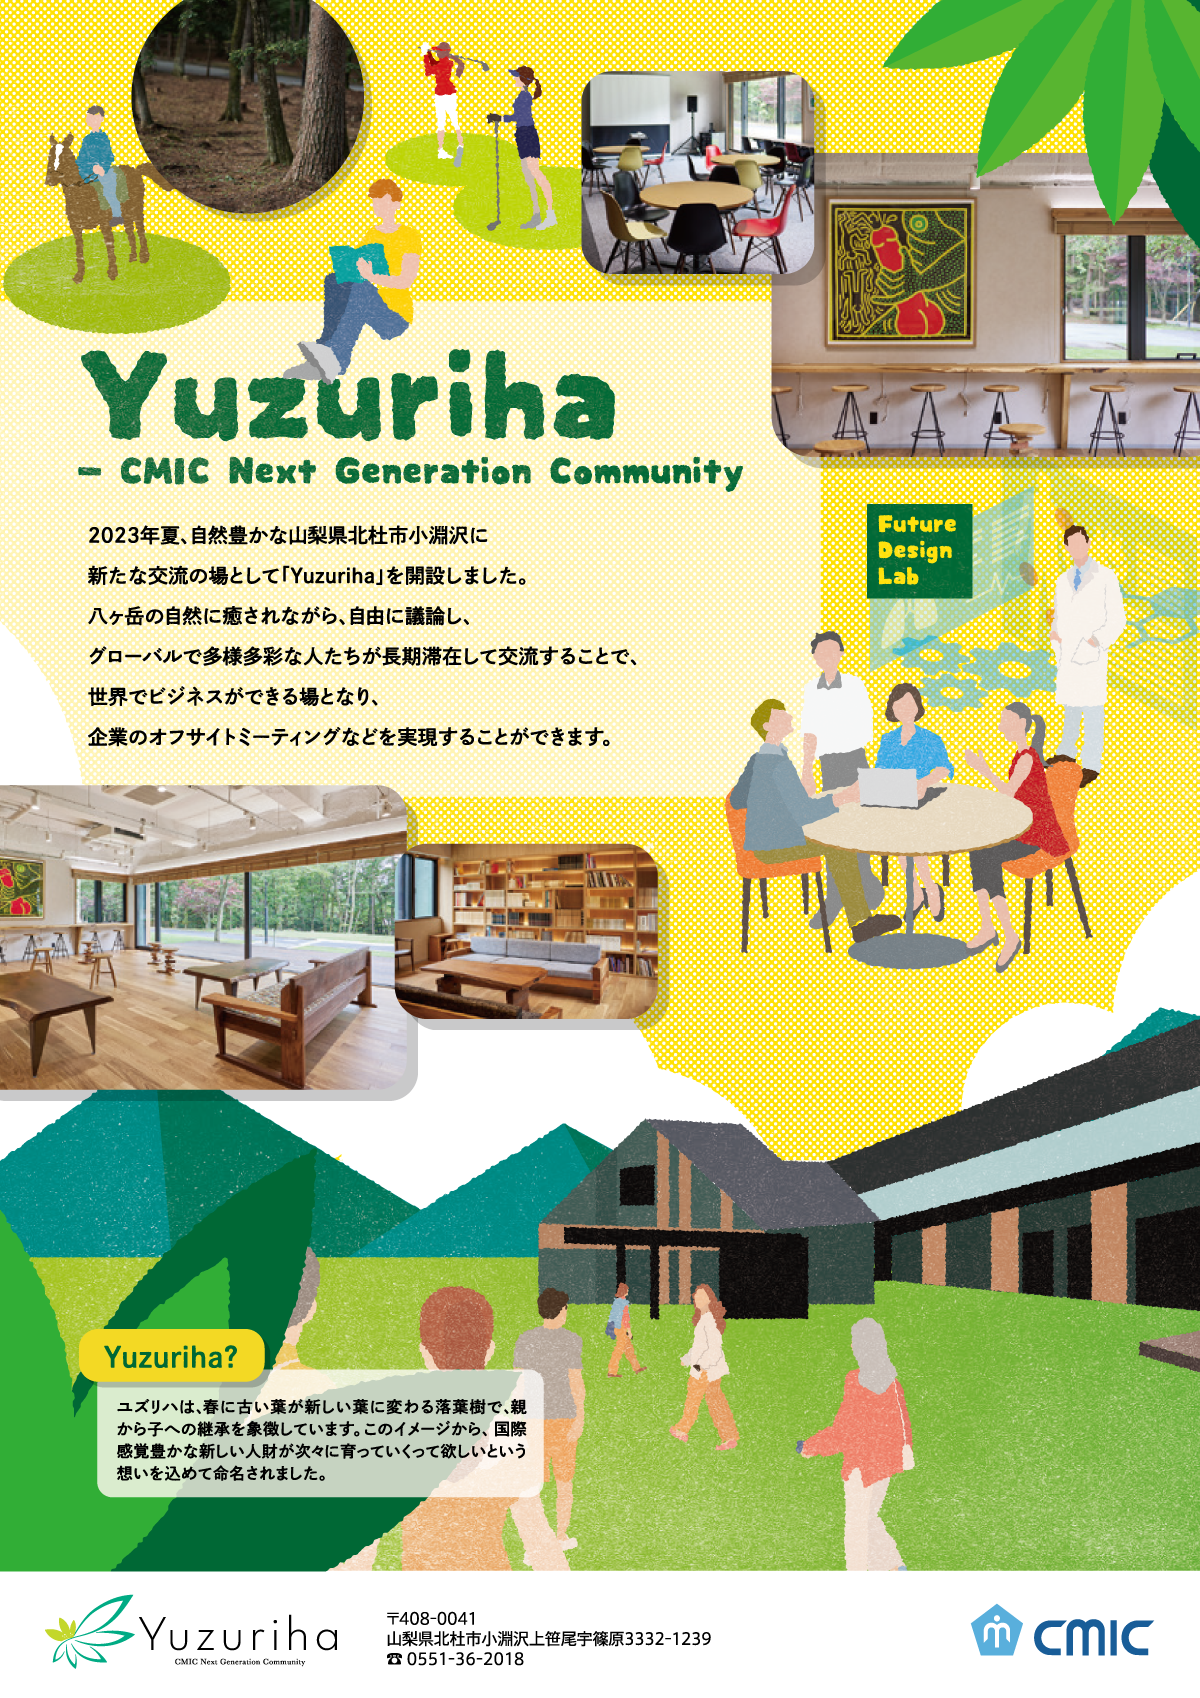 Yuzuriha - CMIC Next Generation Community